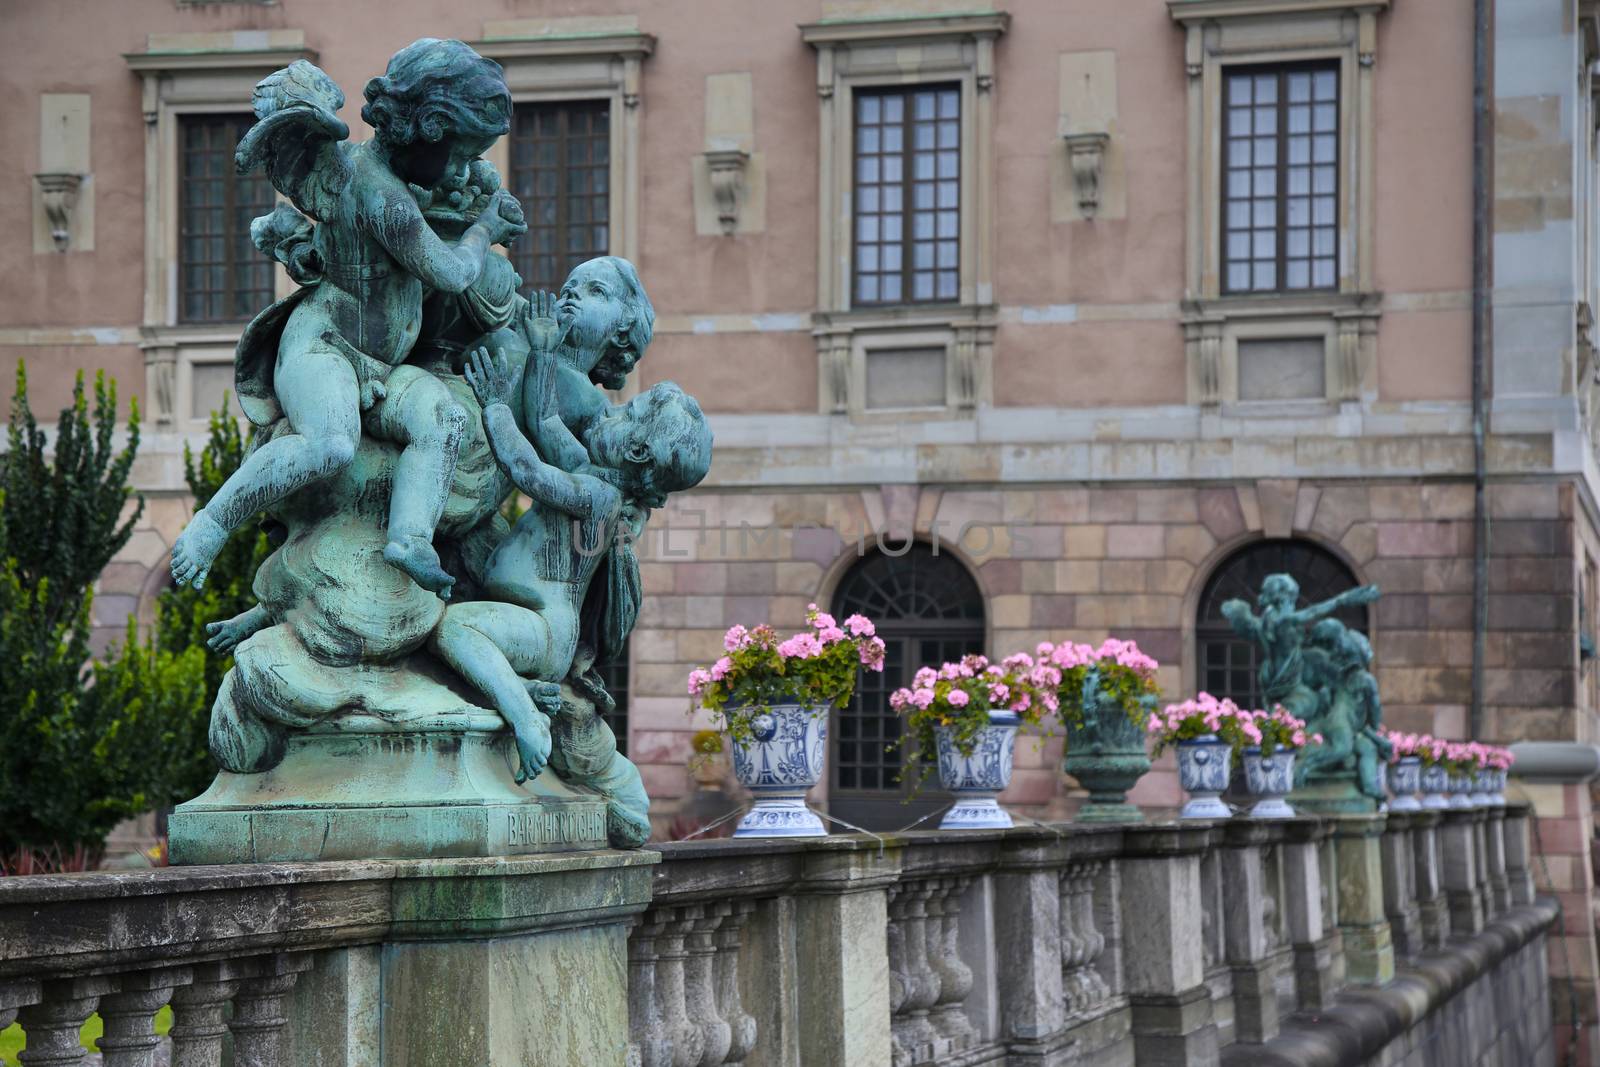 Bronze sculpture Barmhertighet at the Royal palace statue, Stockholm